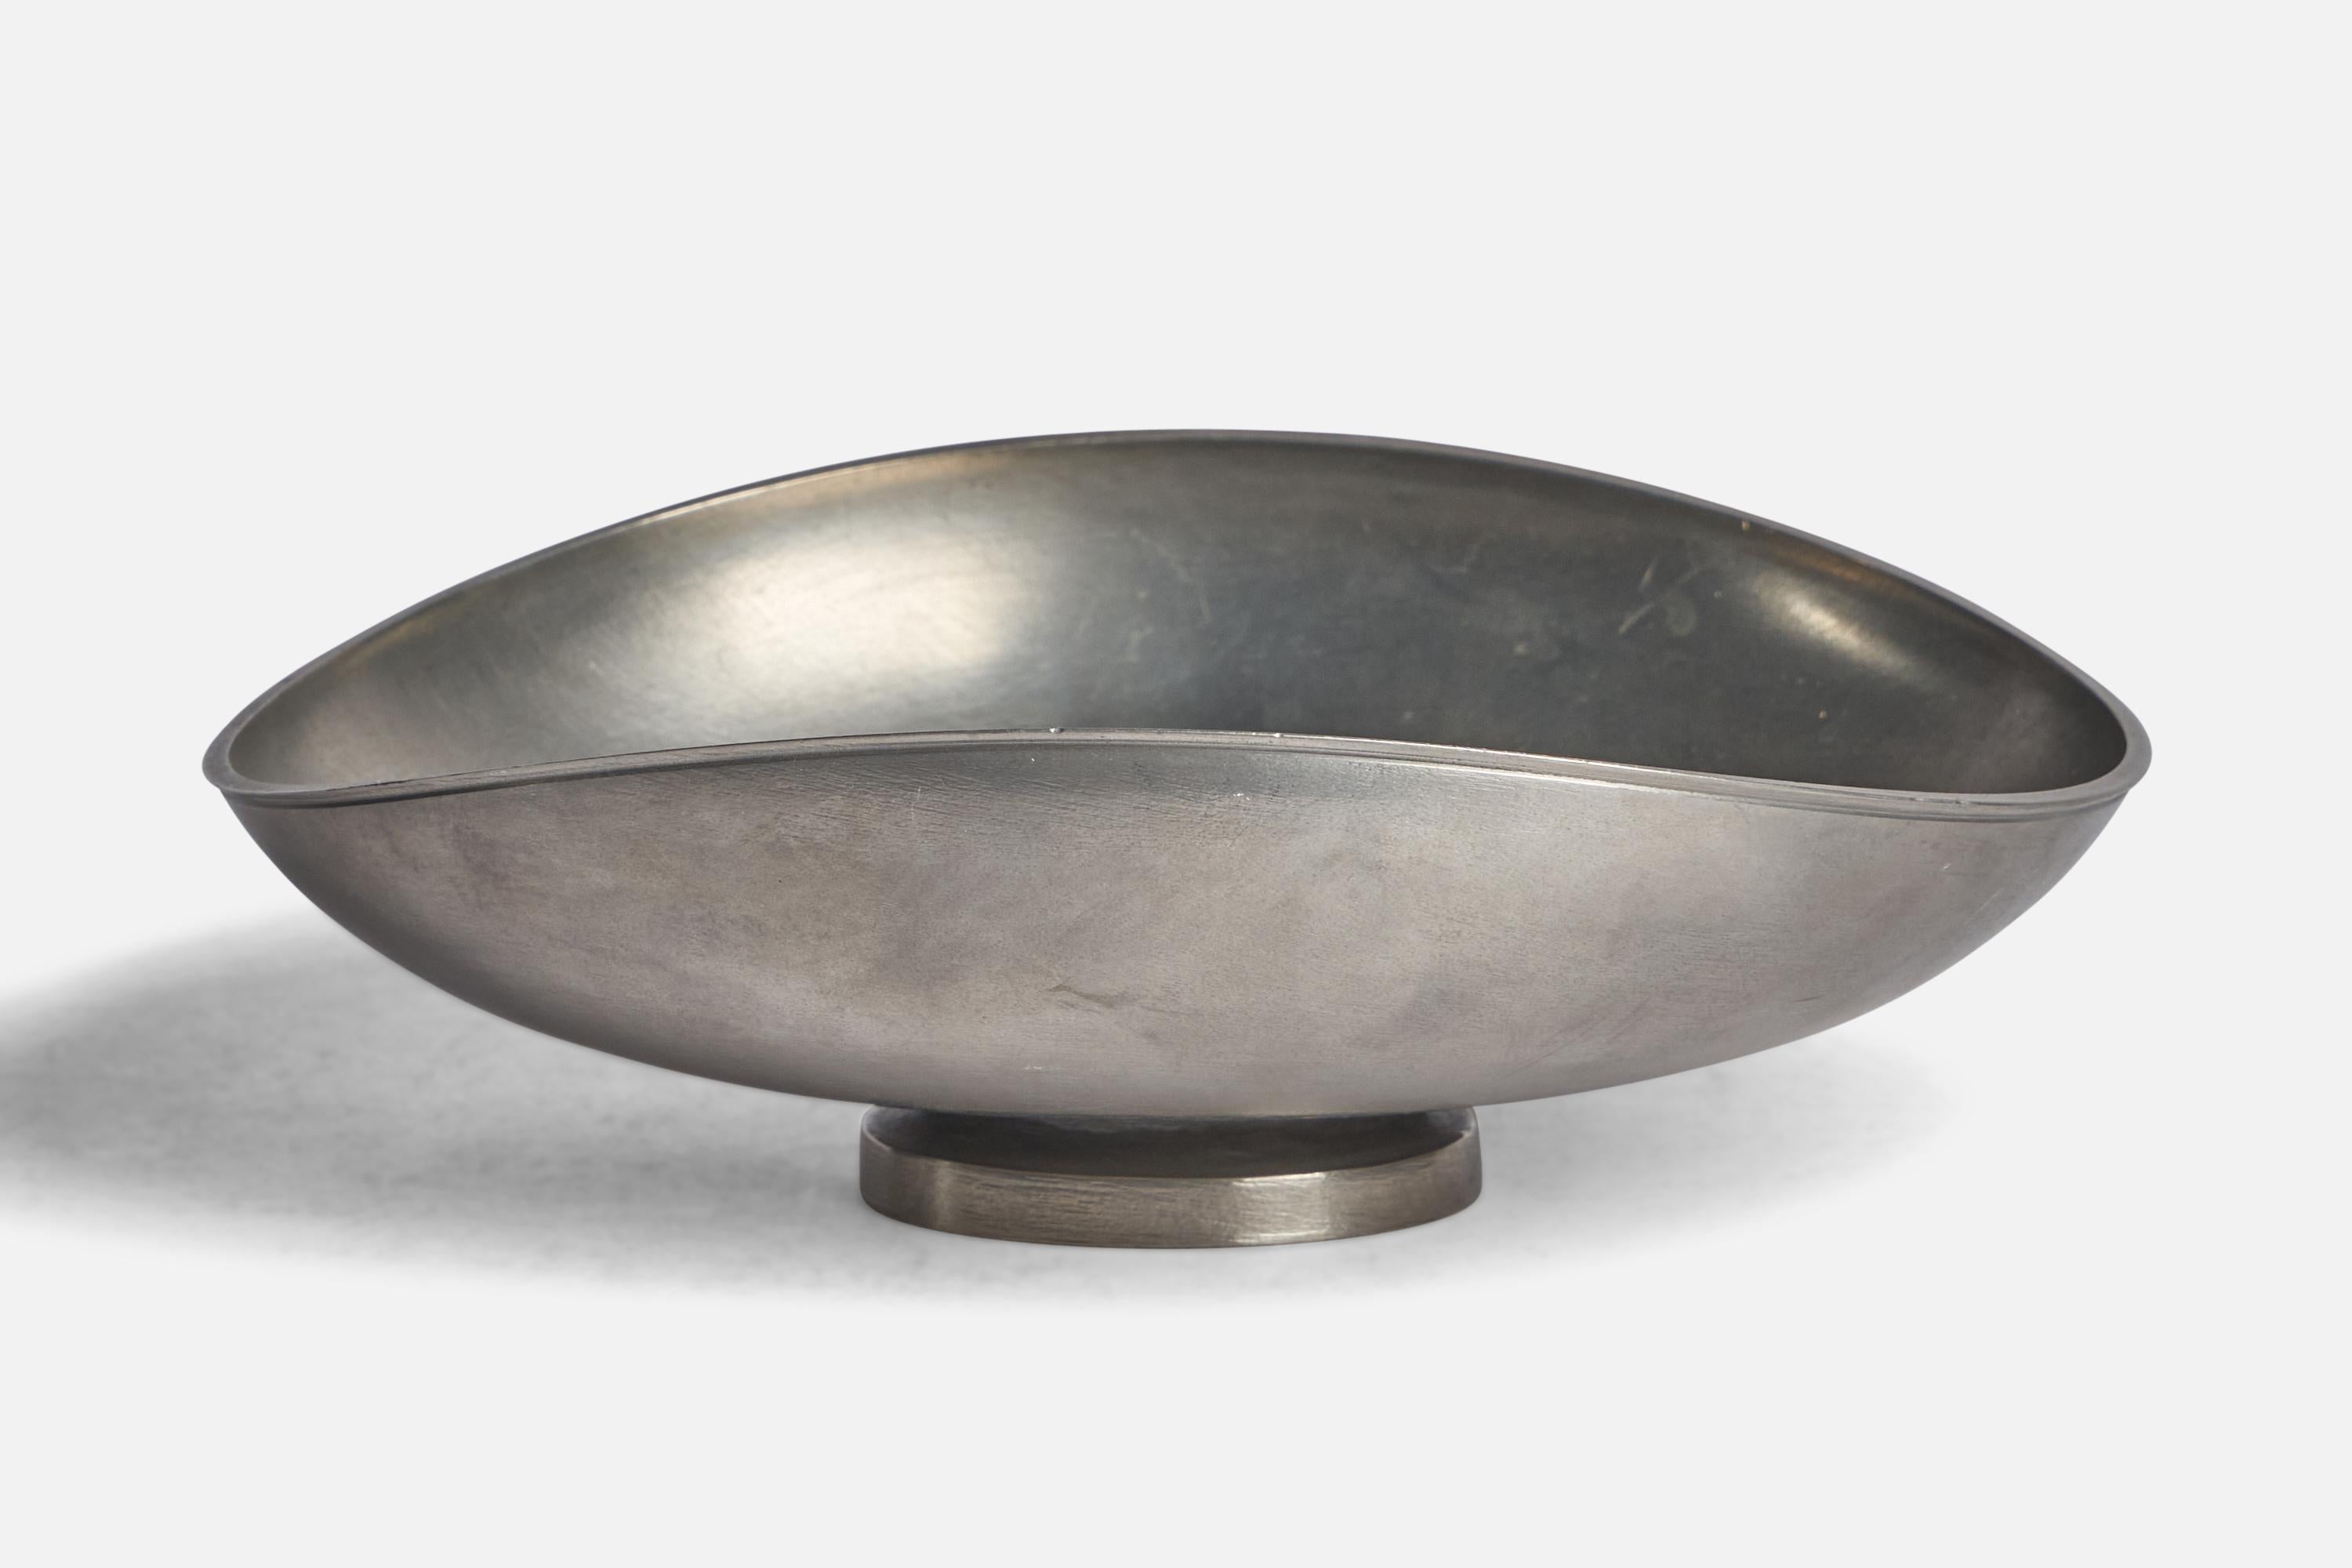 A cast pewter bowl designed and produced by Schreuder & Olsson, Sweden, 1930s.